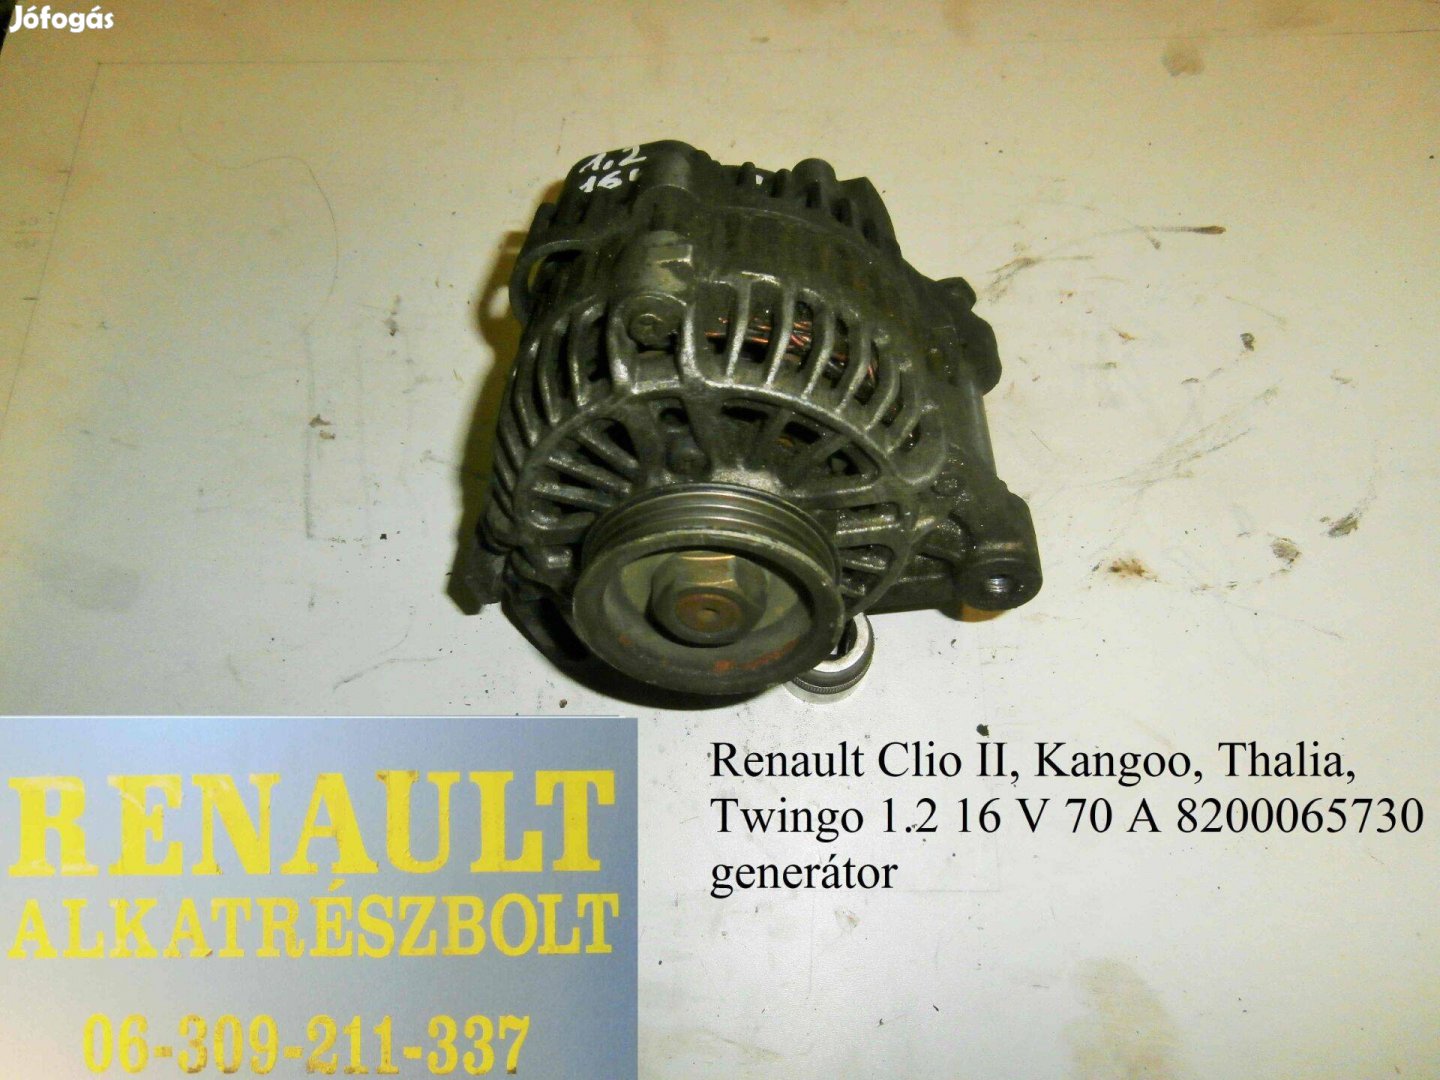 Renault Clio II, Kangoo, Thalia, Twingo 1.2 16 V 70 A 8200065730 gener